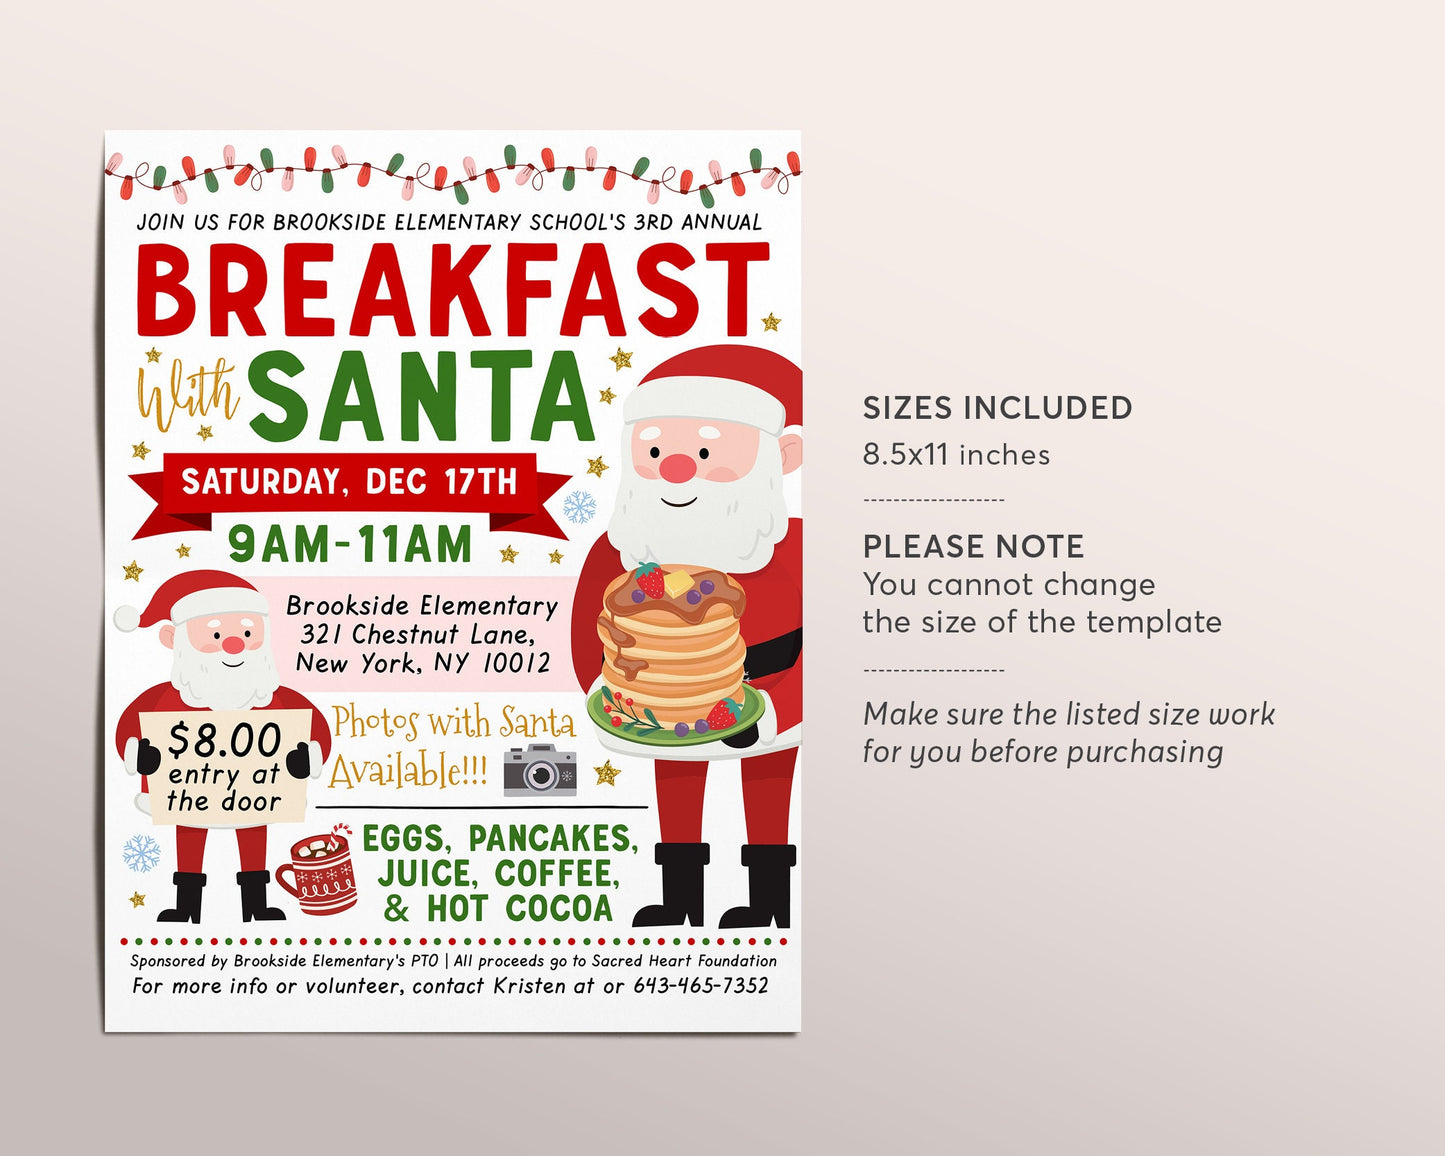 Breakfast with Santa Flyer Editable Template, Pancakes with Santa Invitation, Kids Christmas Party Holiday Invite, Church School PTO PTA